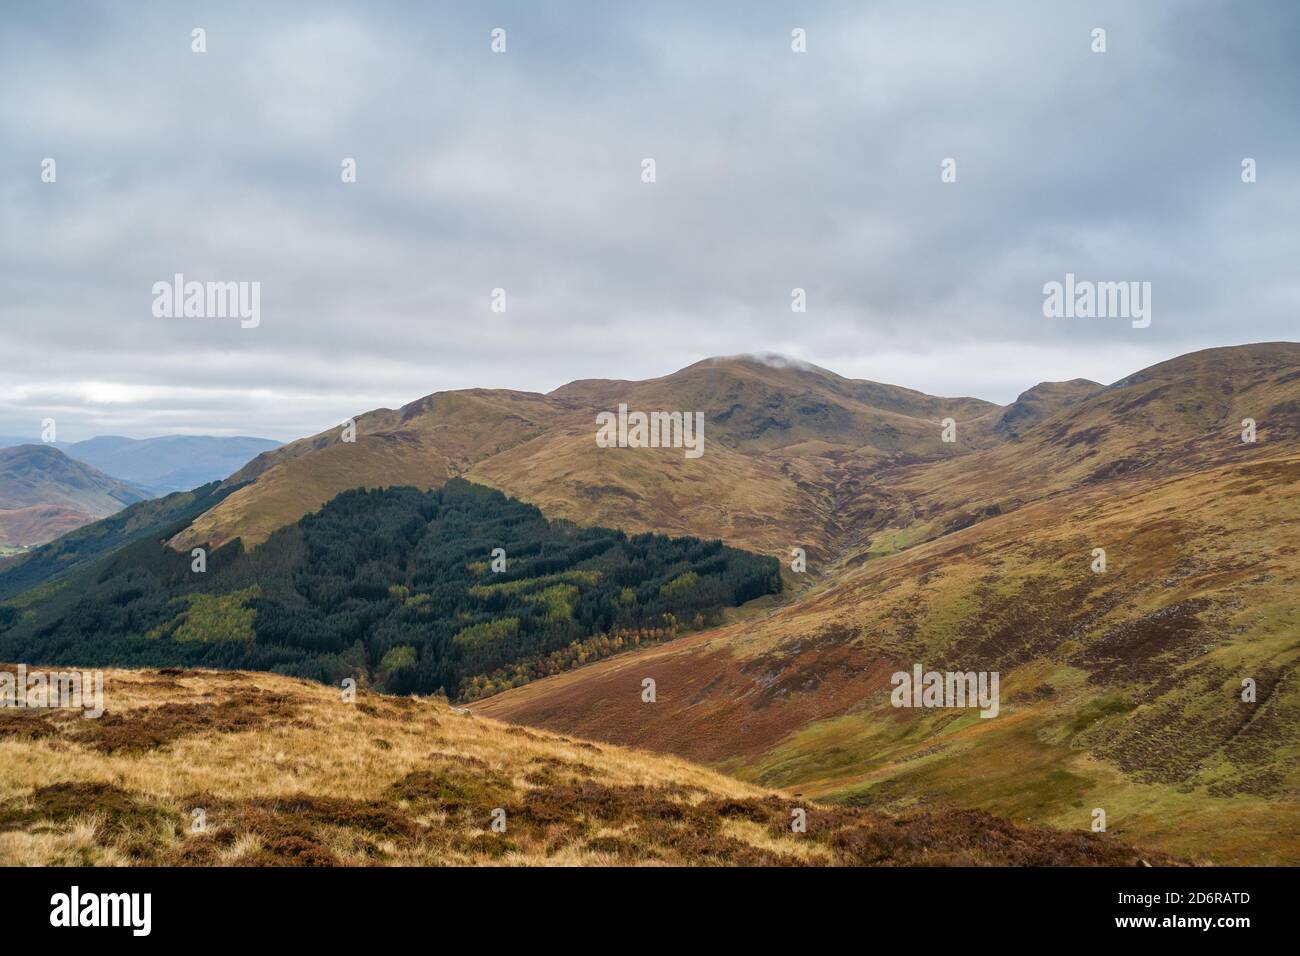 The munro mountain of Carn Gorm in Glen Lyon, Perthshire, Scotland, UK Stock Photo